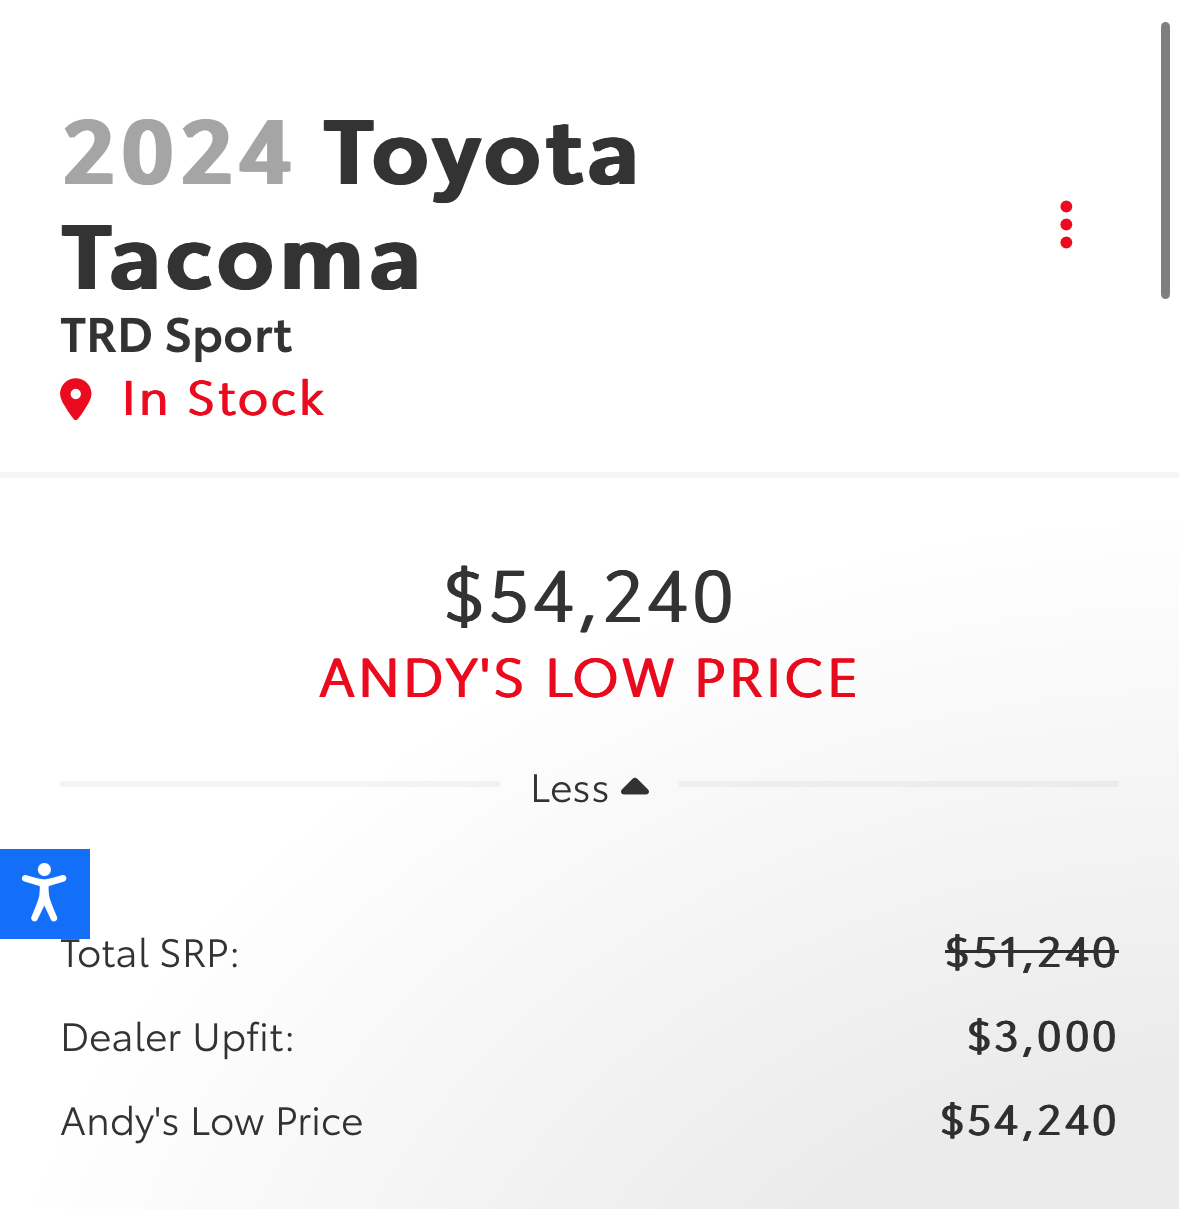 2024 Tacoma Celestial Silver Metallic 2024 Tacoma TRD Sport @ Andy Mohr Toyota in Avon, Indiana ($54k) IMG_0555